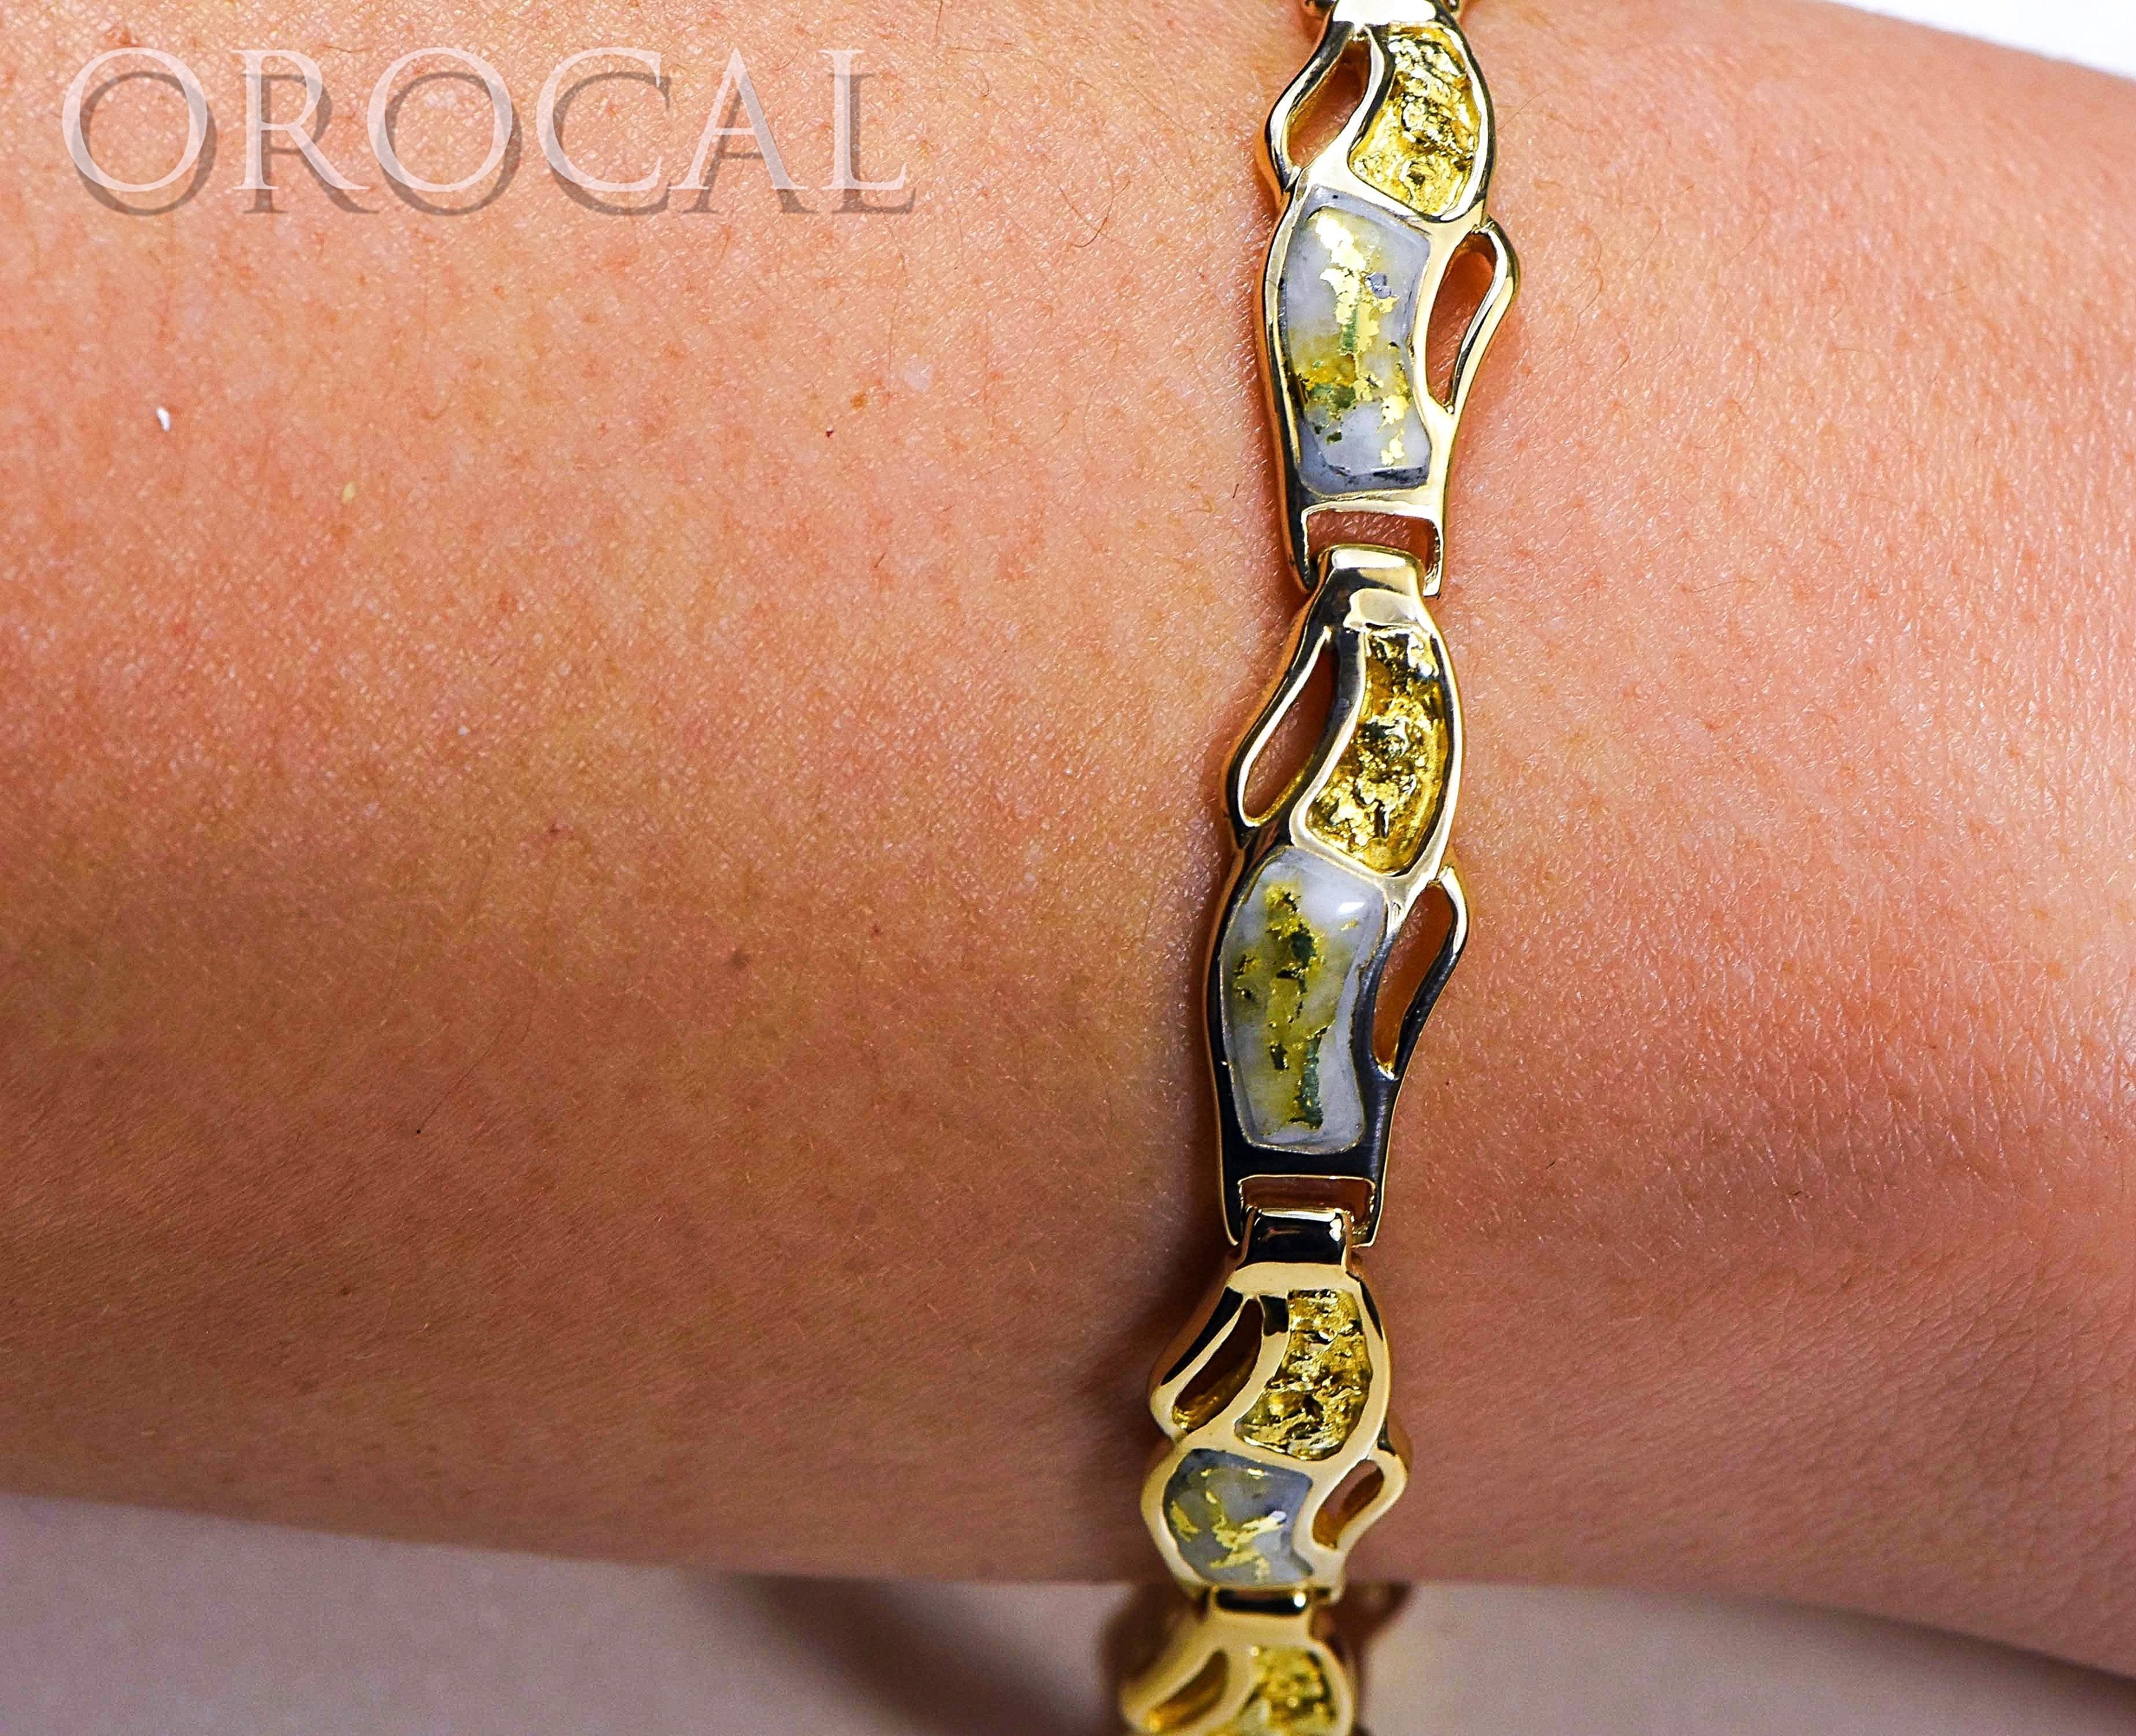 Gold Quartz Bracelet "Orocal" BWB24OLQ Genuine Hand Crafted Jewelry - 14K Gold Casting